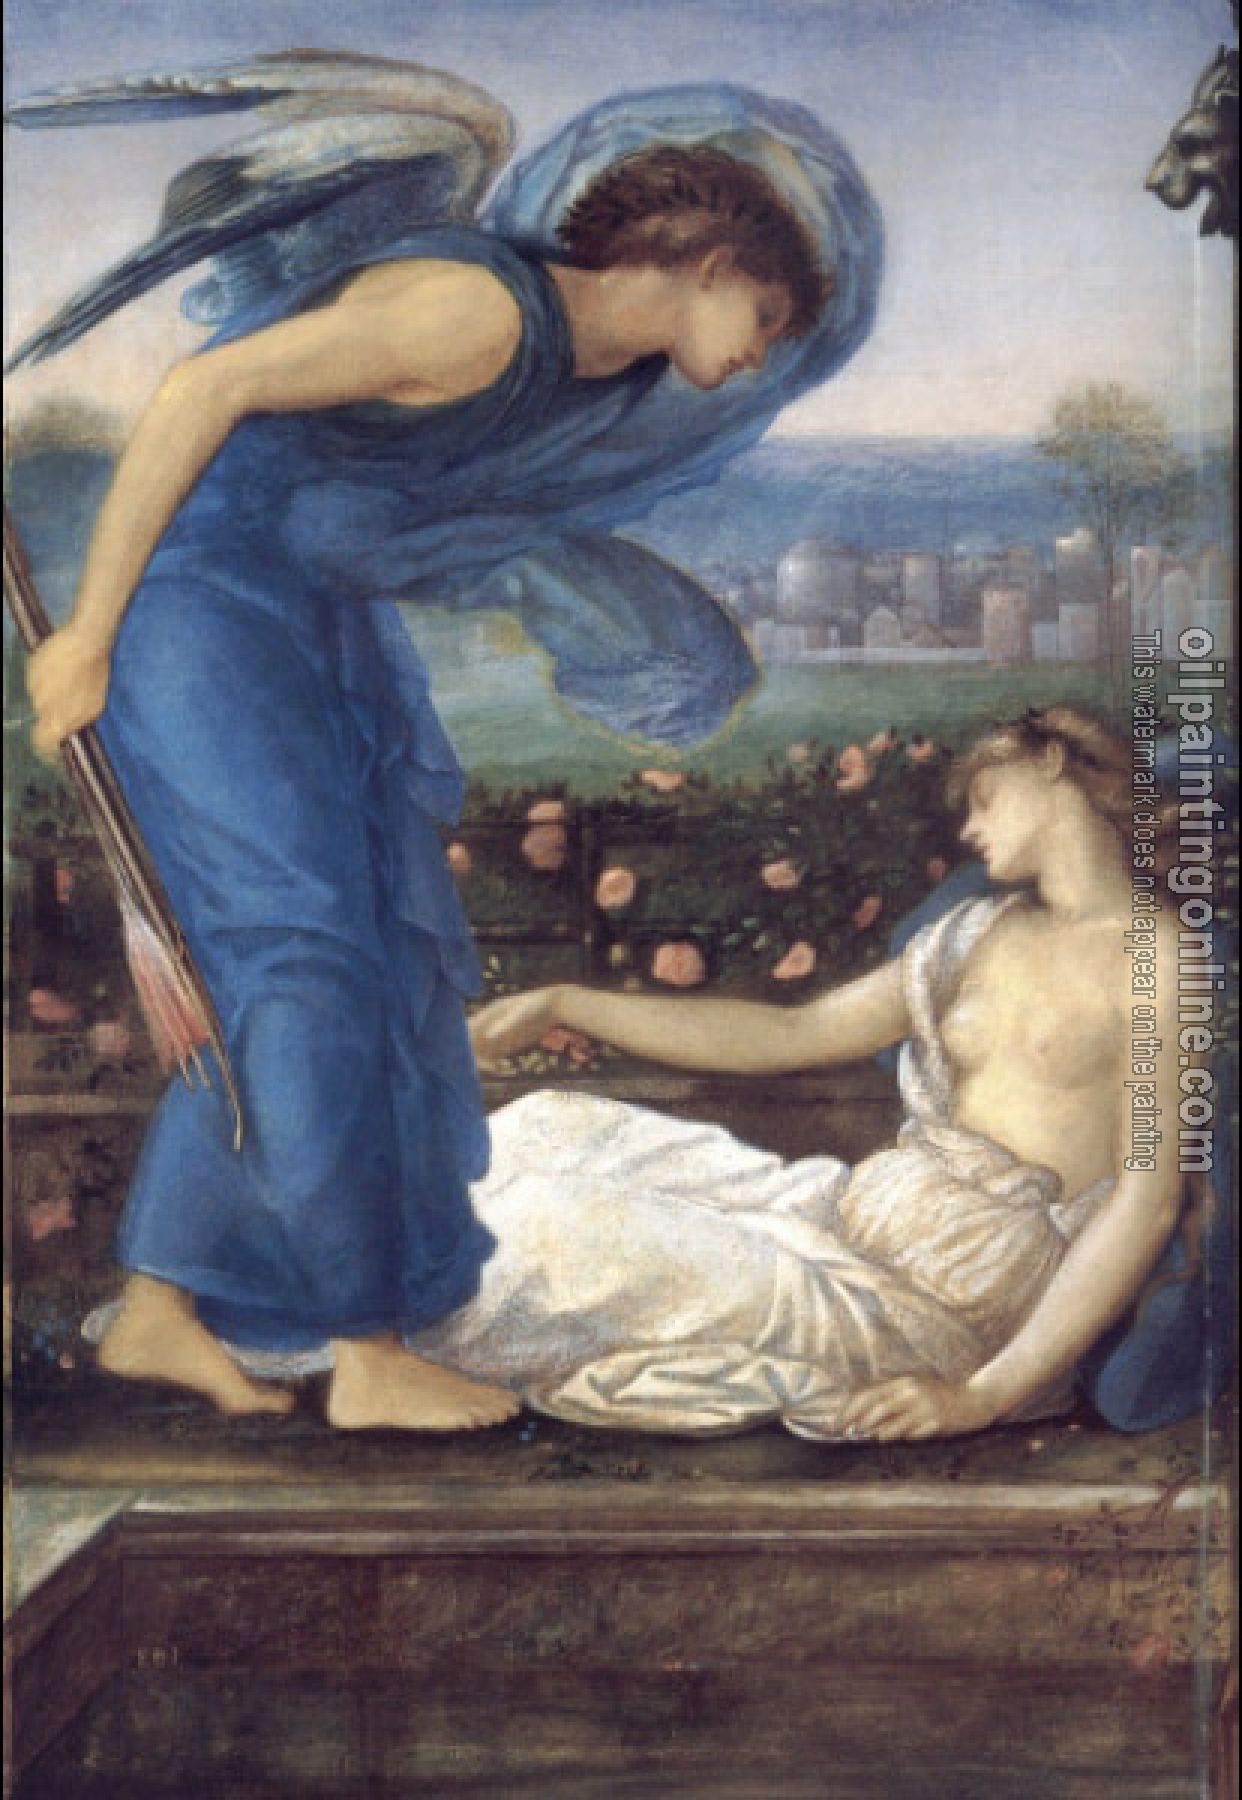 Burne-Jones, Sir Edward Coley - Cupid Finding Psyche